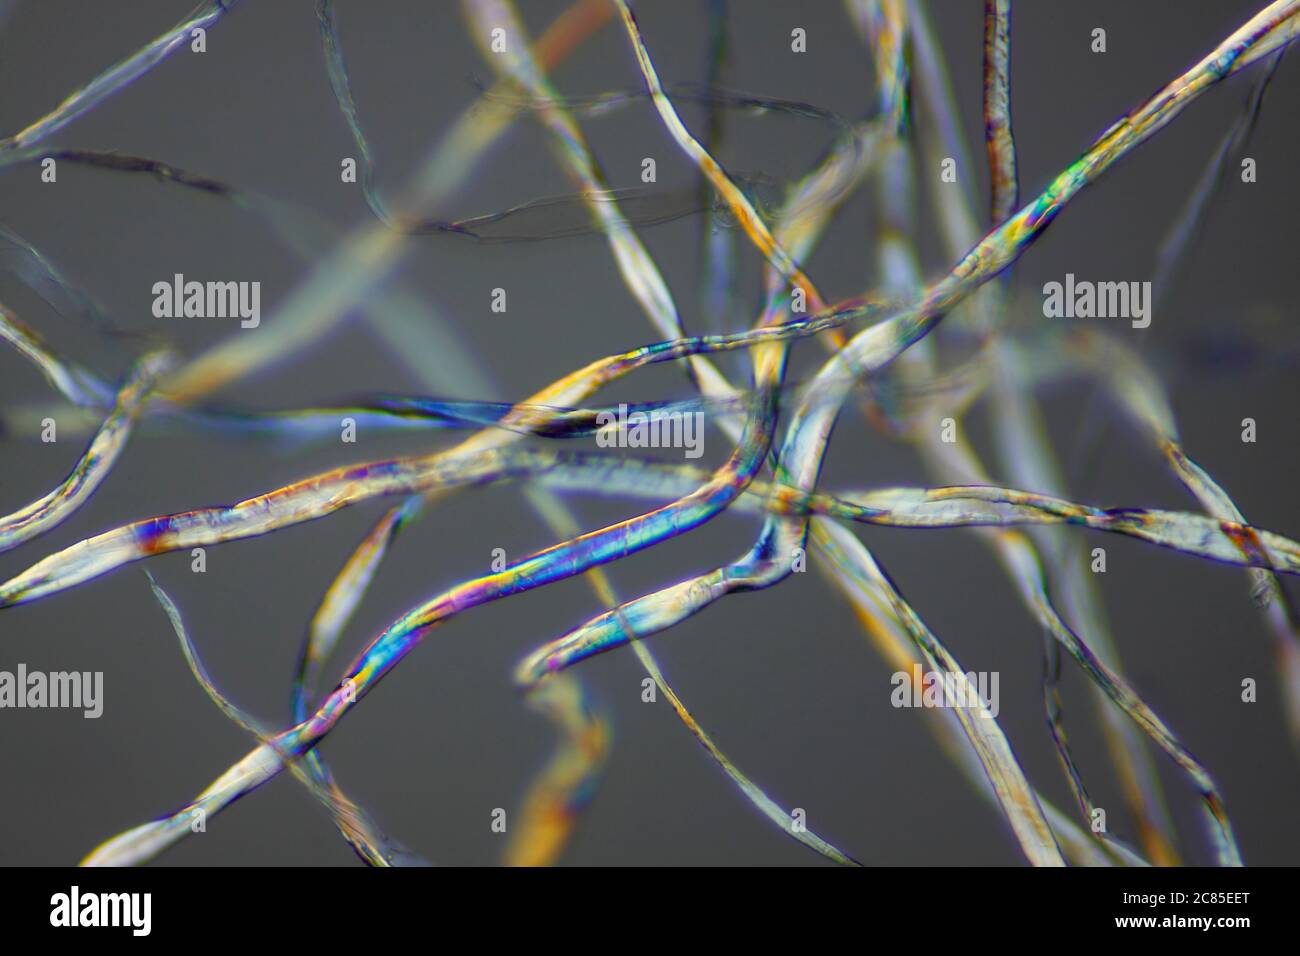 Microscopic view of a cotton fibers. Polarized light, partially crossed polarizers. Stock Photo